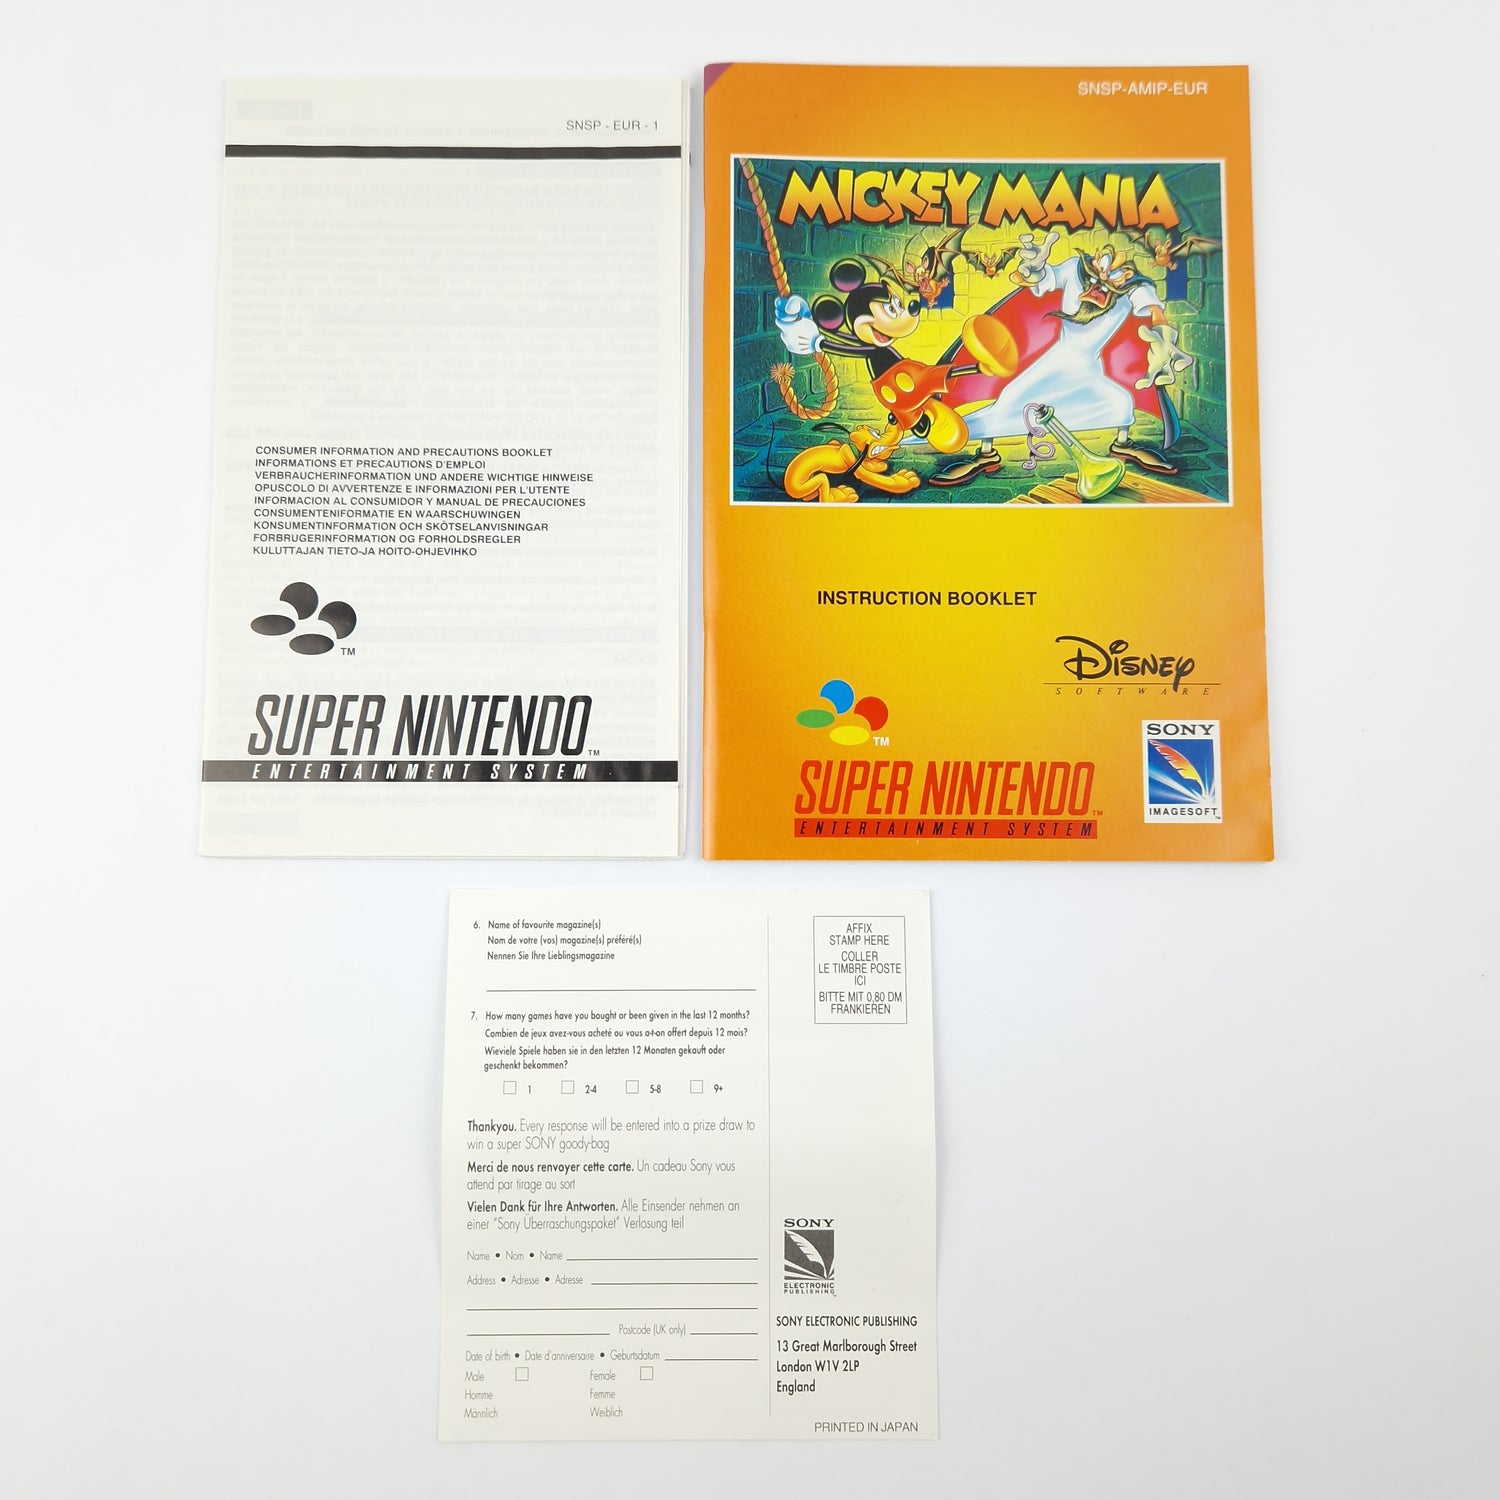 Super Nintendo Spiel : Mickey Mania - Modul Anleitung OVP cib / SNES Disney PAL